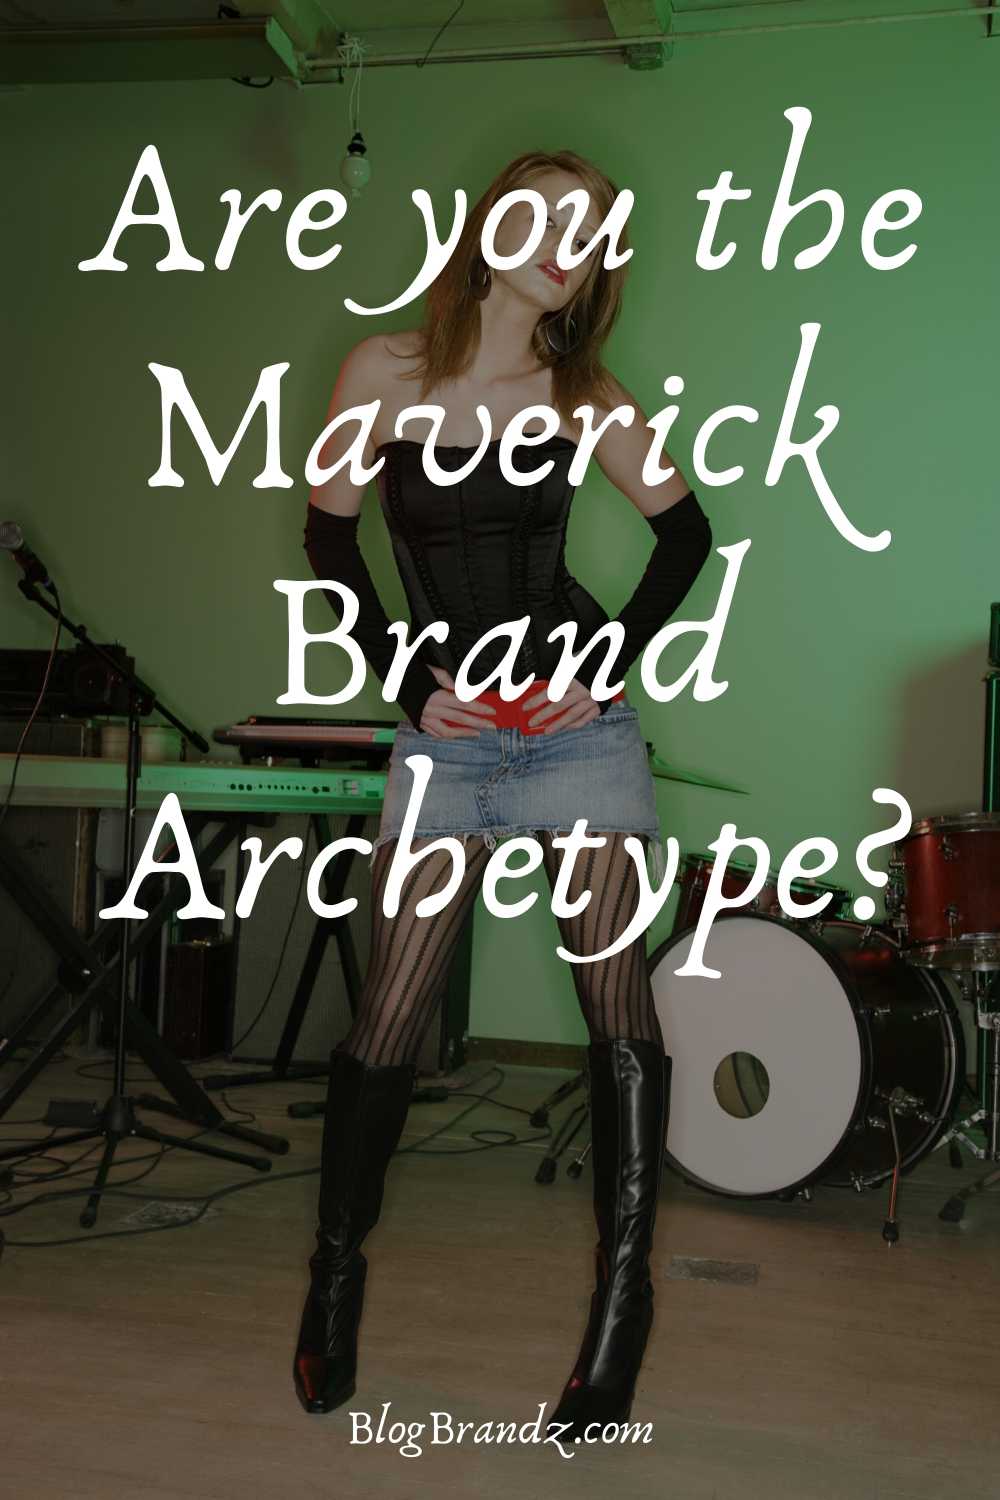 Brand Archetype Maverick